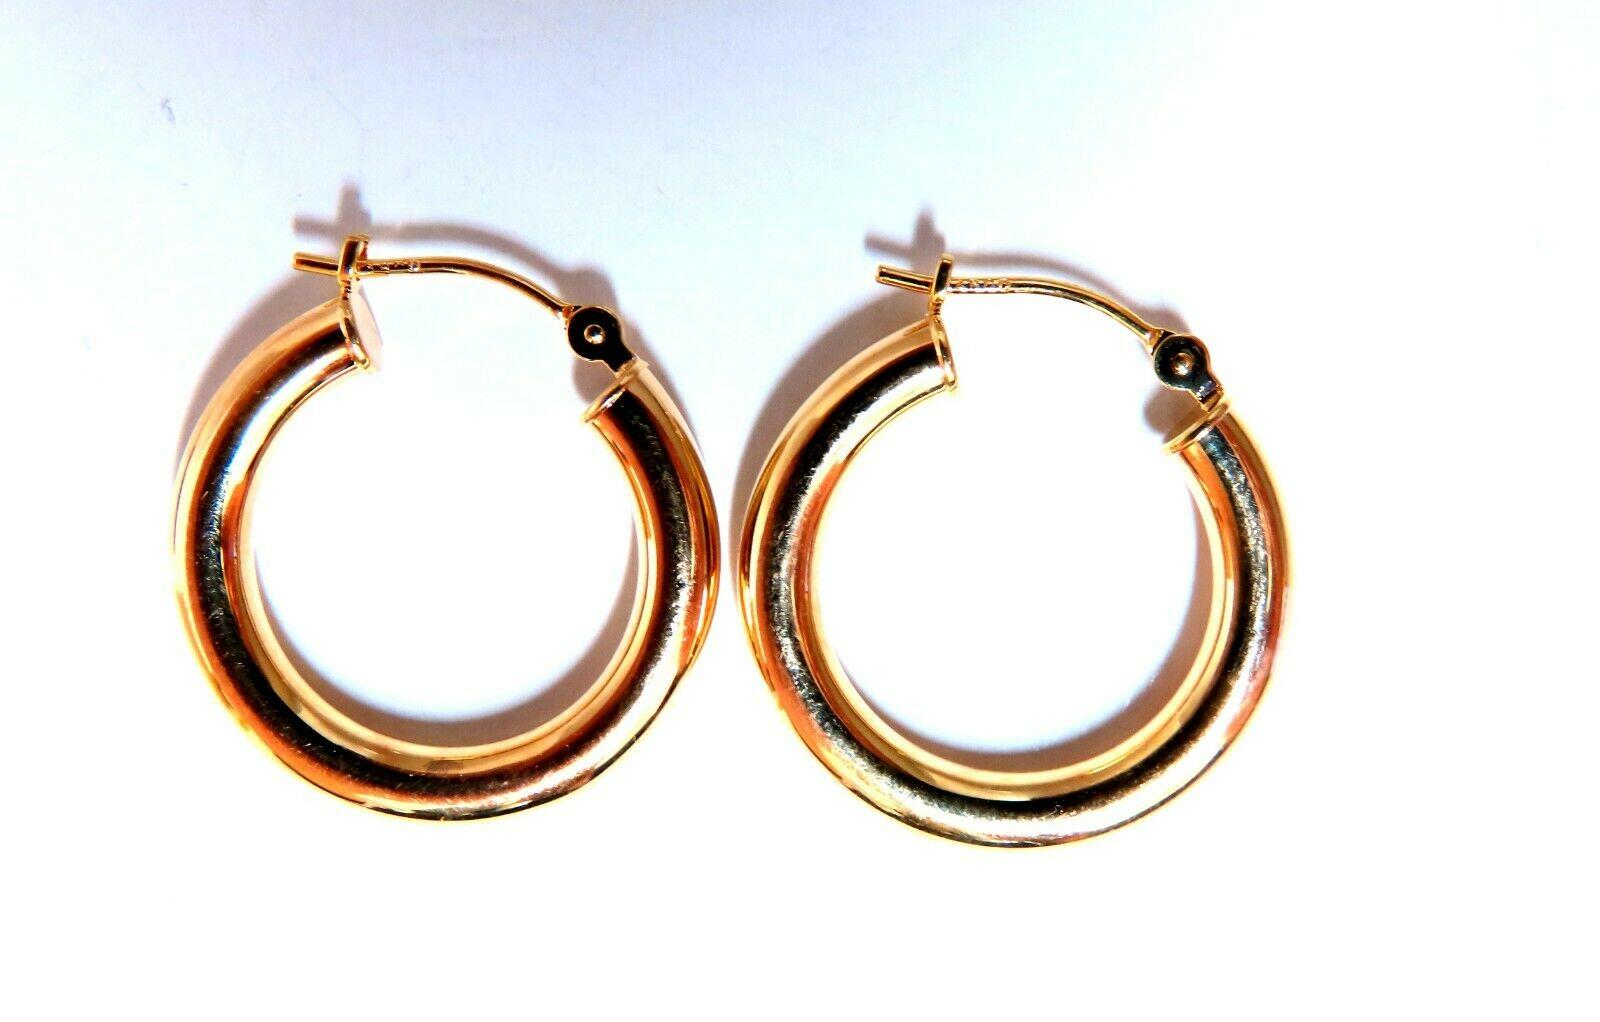 Classic Tubular Hoop Earrings

Measurements of Earrings:

20mm diameter

2.8mm tube.

1.2 grams / 14kt. Yellow gold

Earrings are gorgeous made